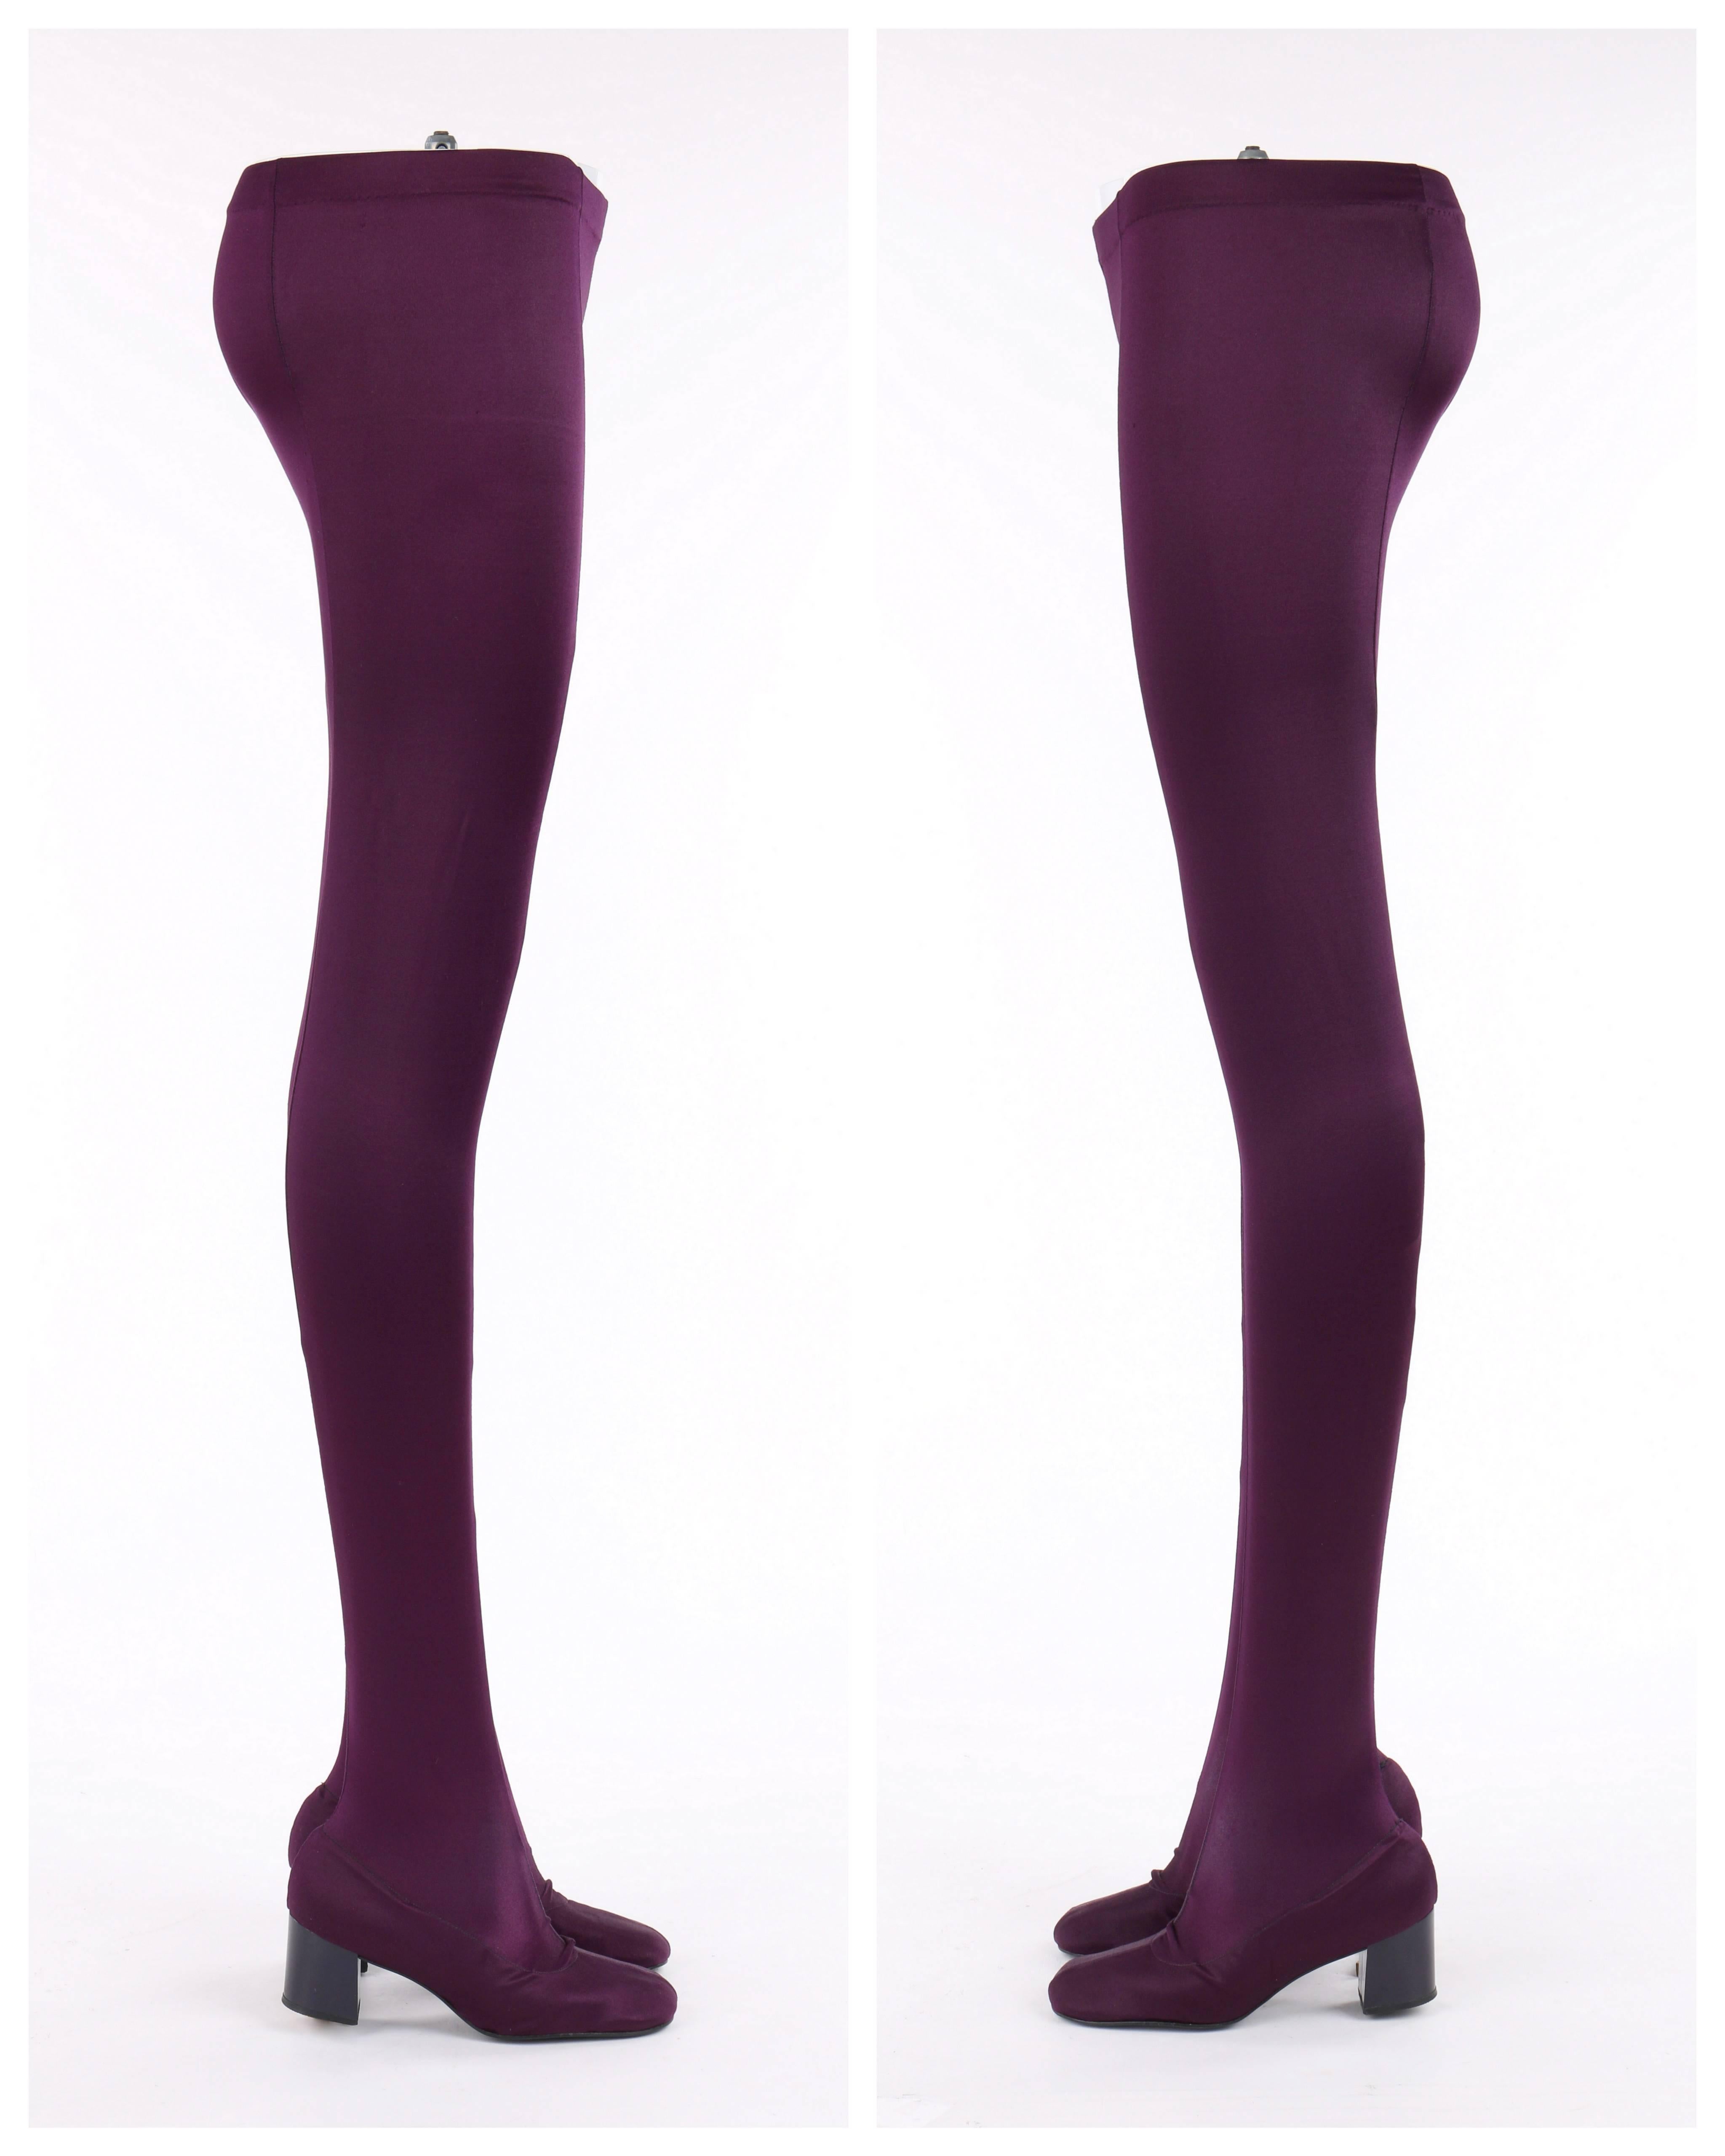 PAN-T-BOOTS ca. 1960er Jahre Pflaumenfarbene lila Leggings Hosenstiefel Größe 6 - 7 M (Schwarz) im Angebot